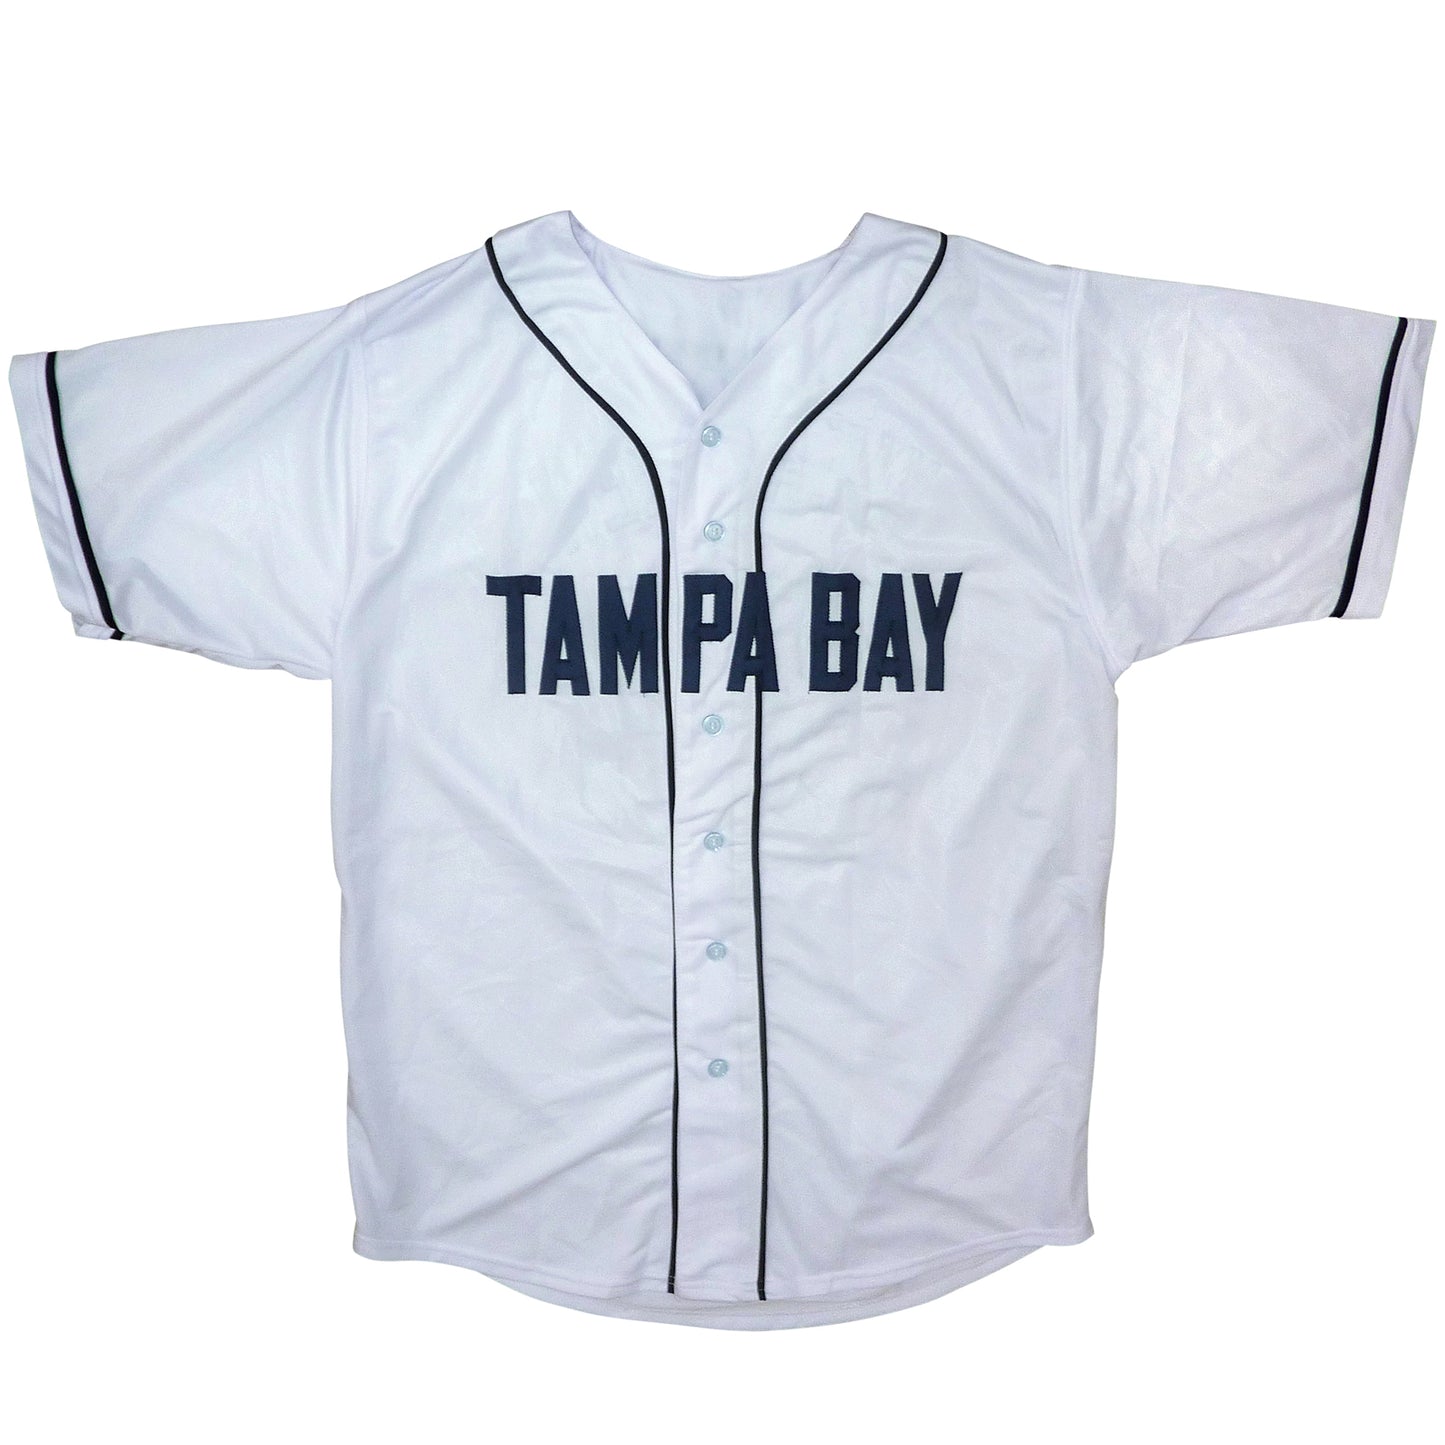 Kevin Kiermaier Autographed Tampa Bay (White #39) Custom Jersey - JSA